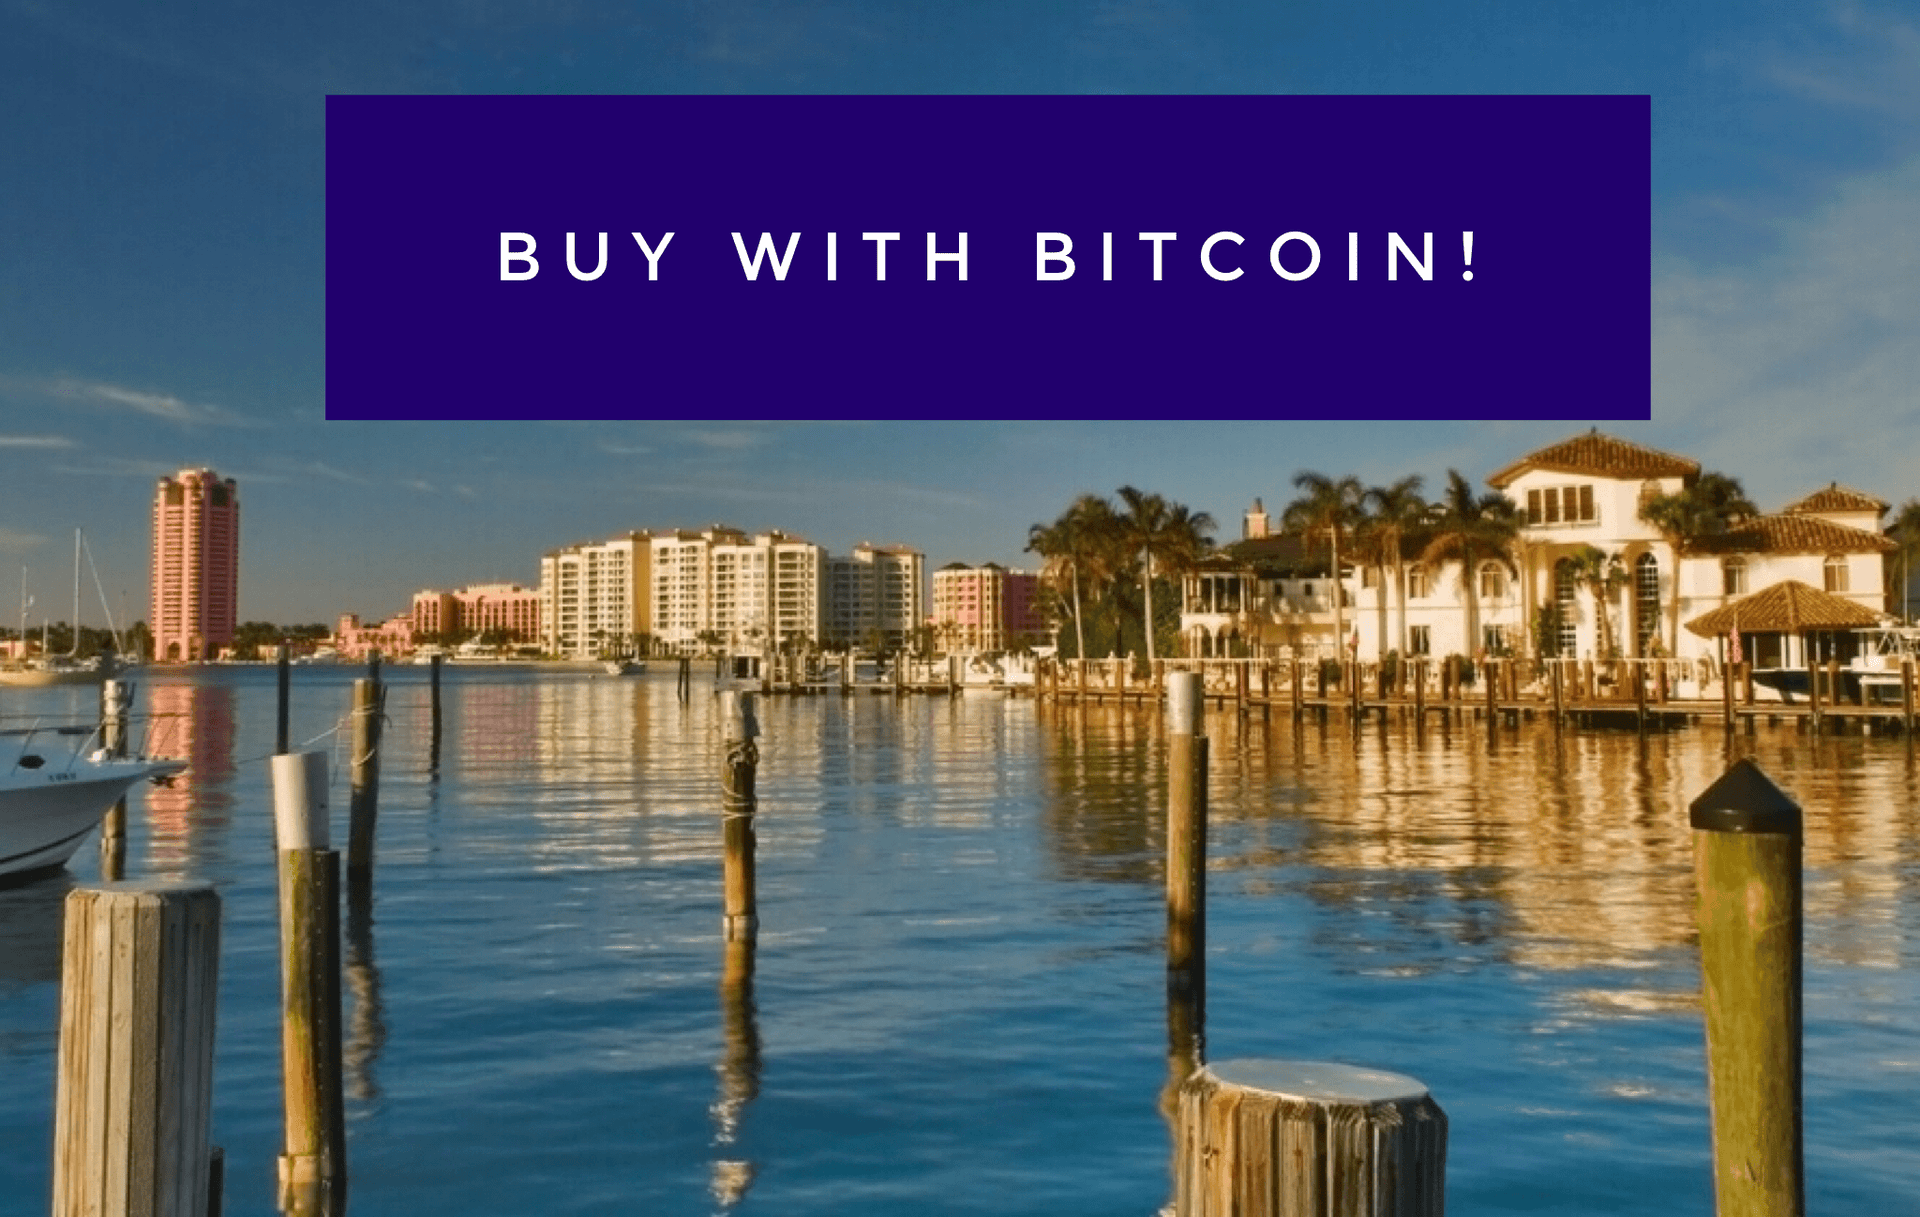 buy home florida for bitcoins